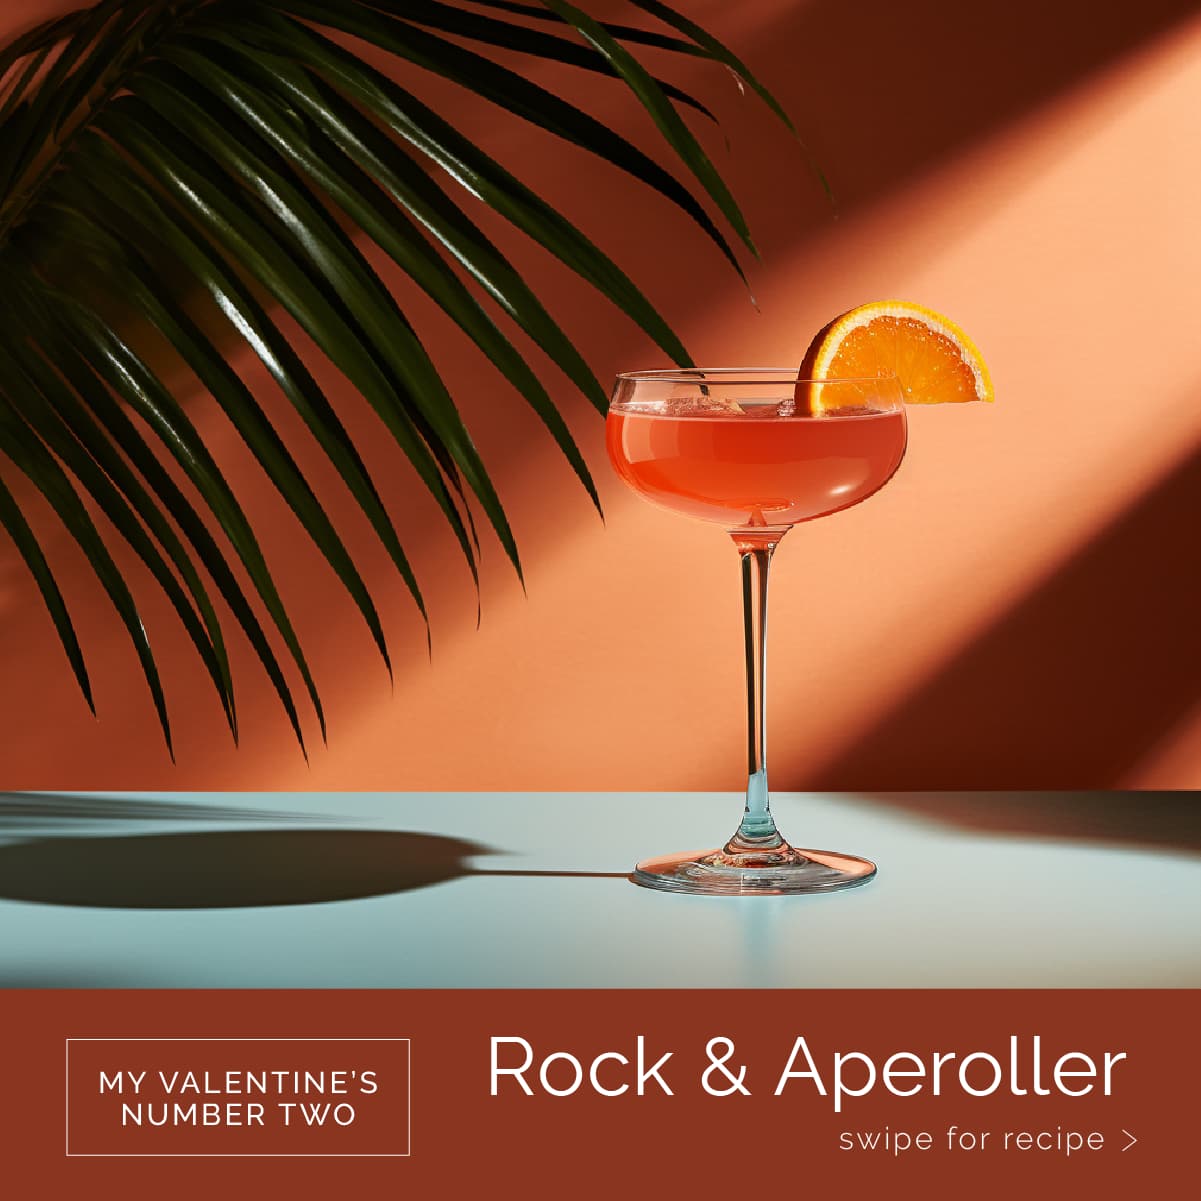 A Rock & Aperoller cocktail